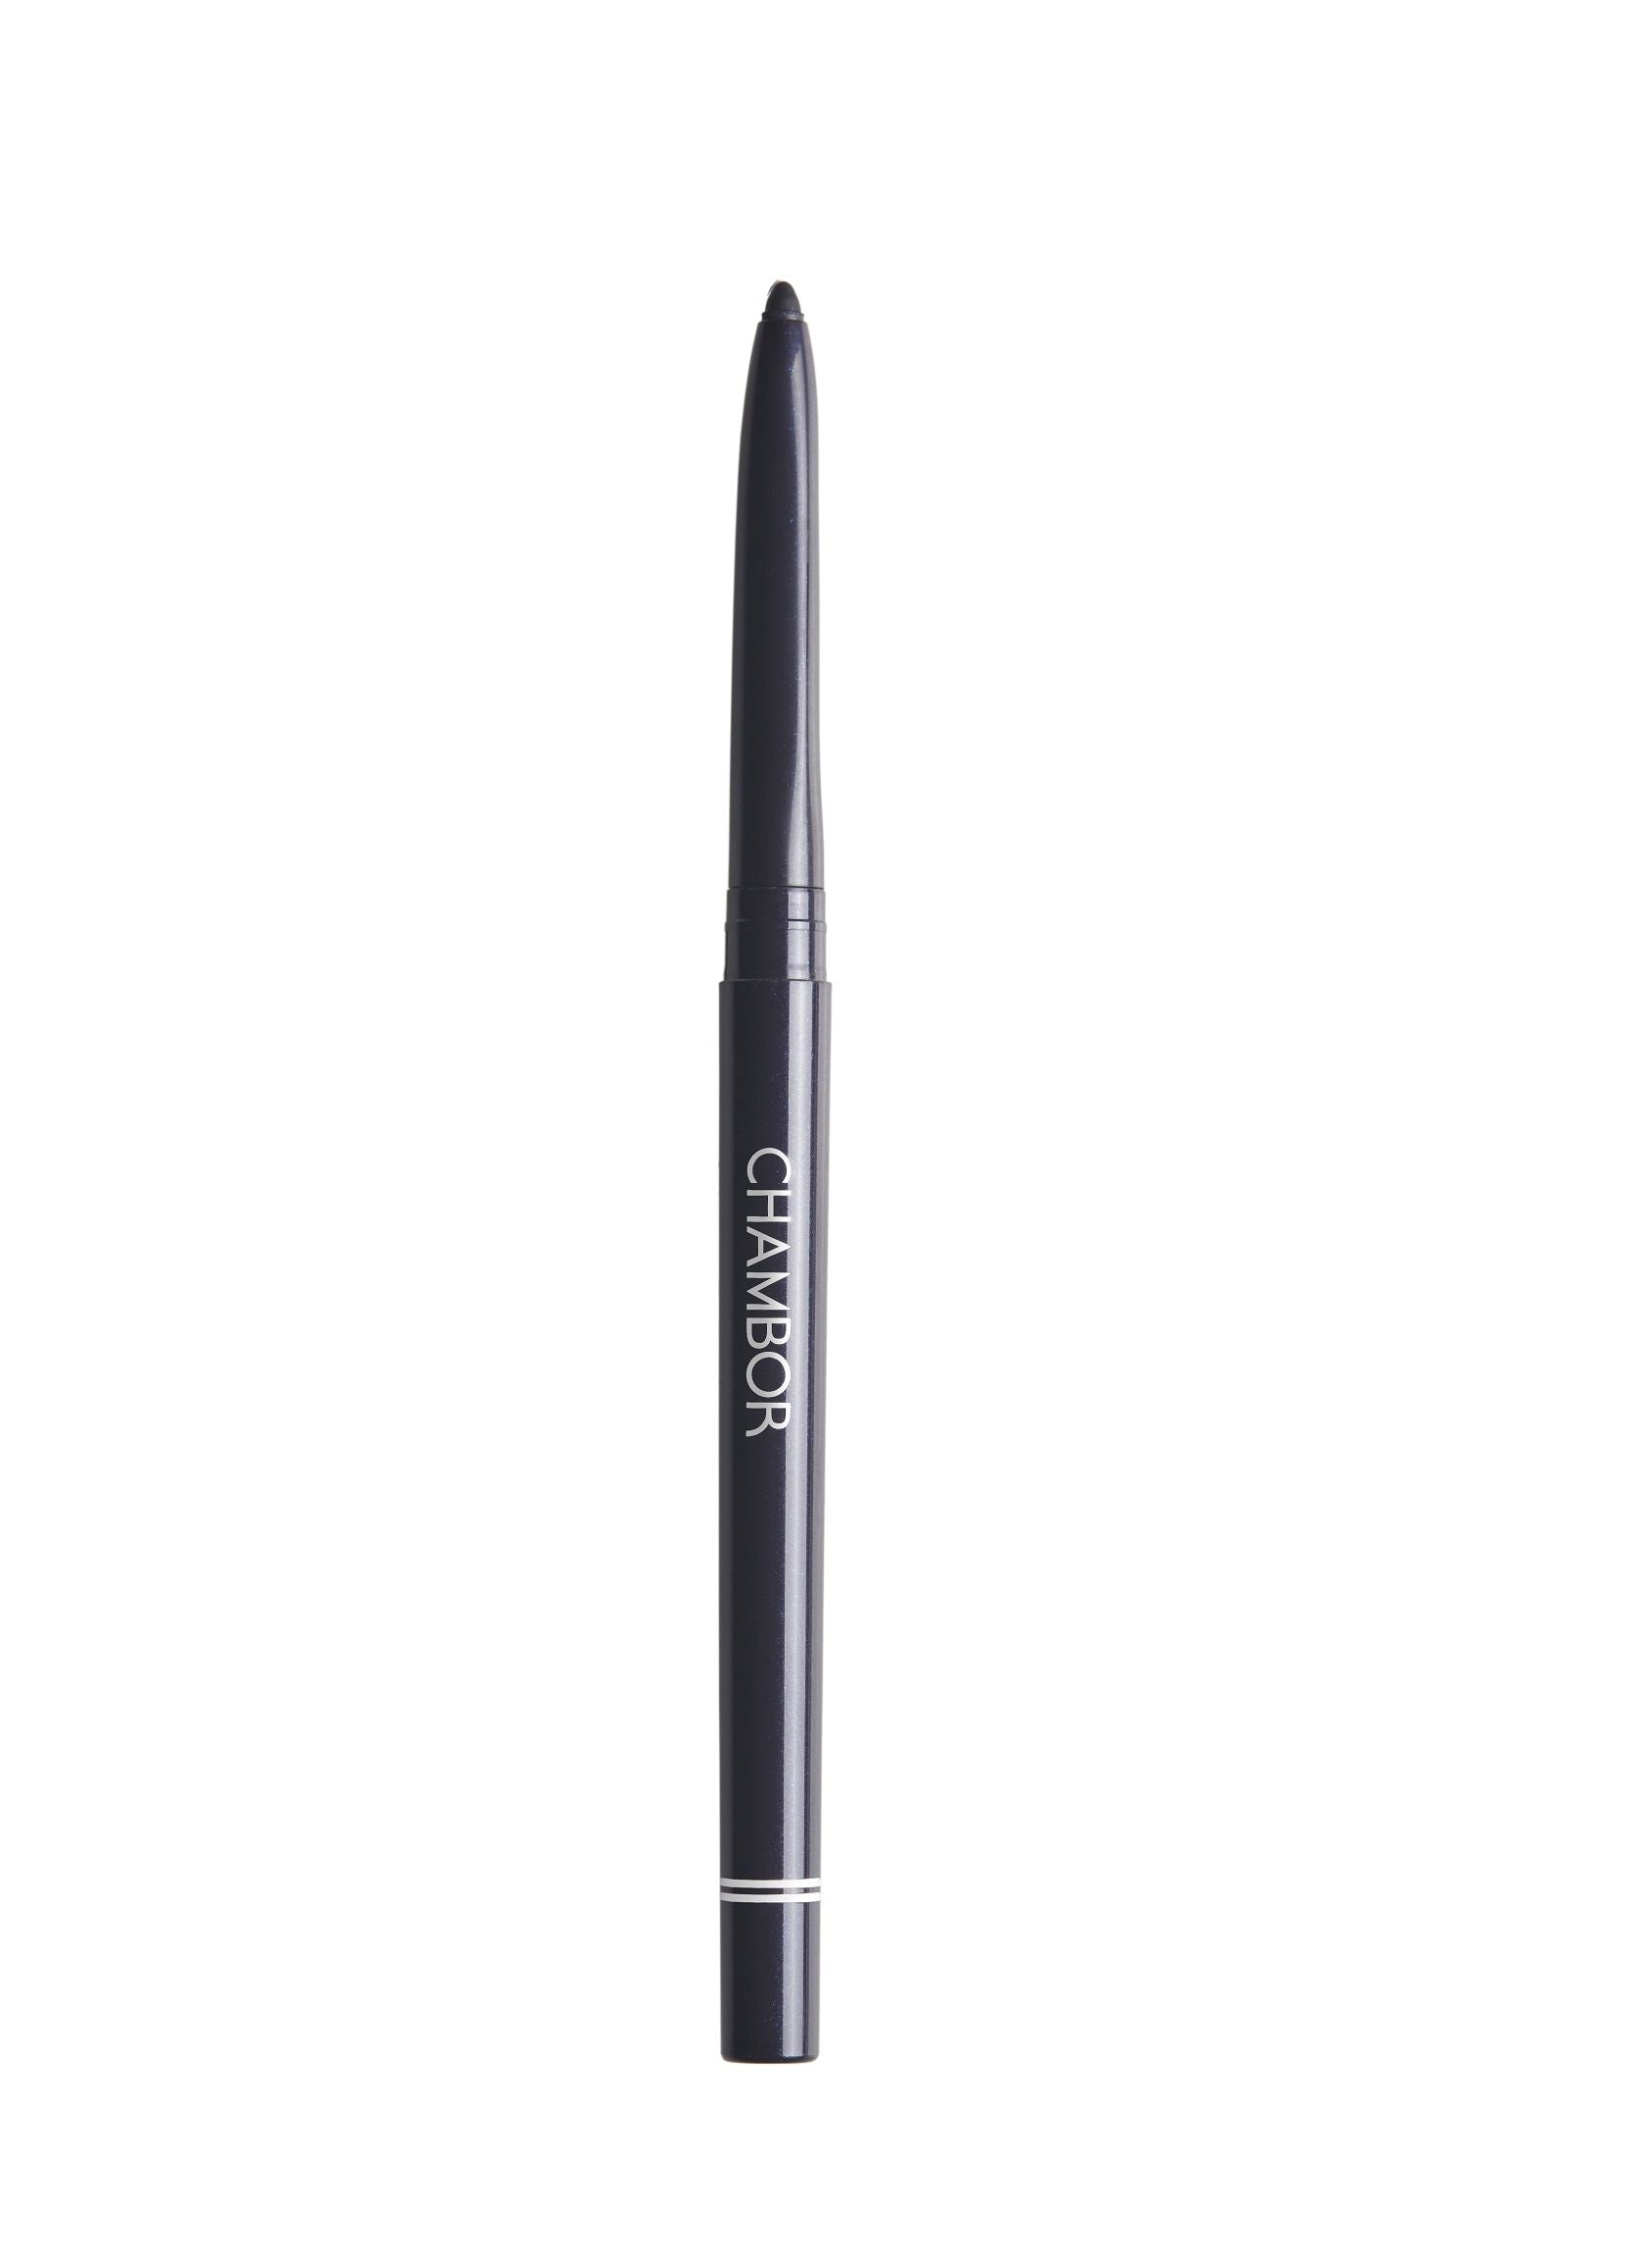 Chambor Geneva Intense Definition Gel Eye Liner Pencil (0.25g) Chambor Geneva